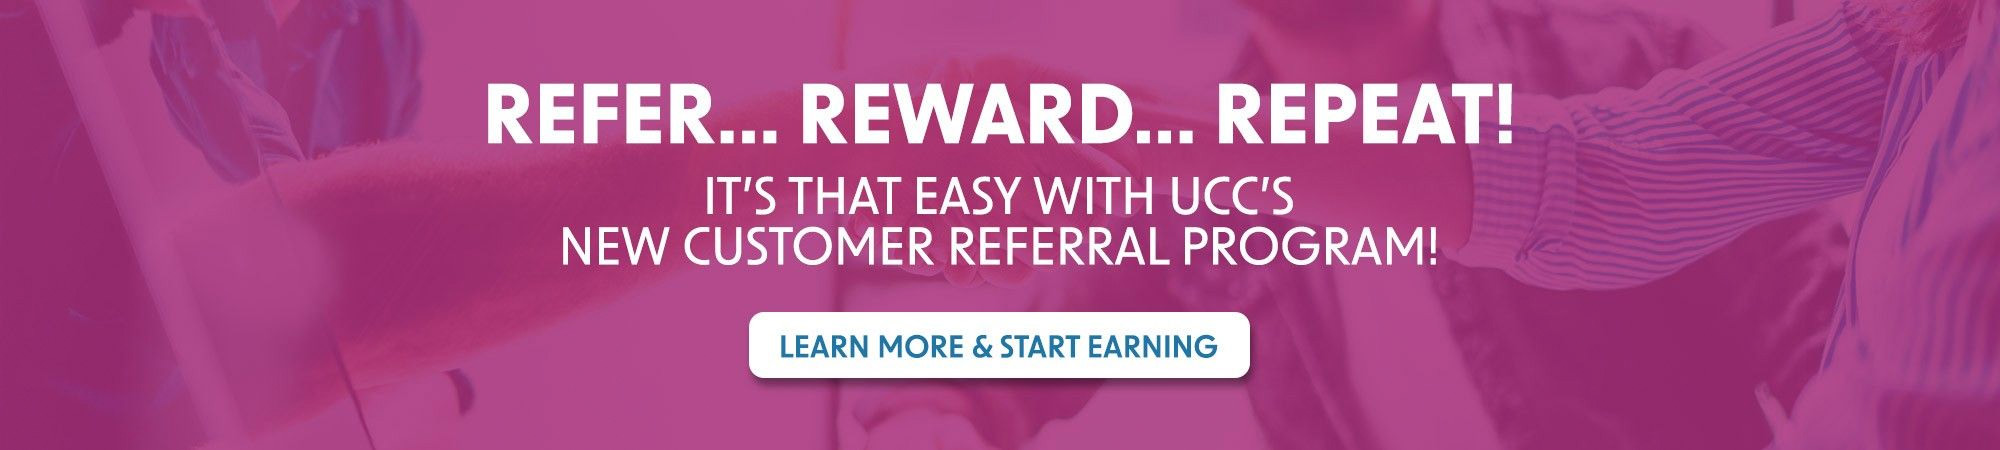 refer, reward, repeat. learn more